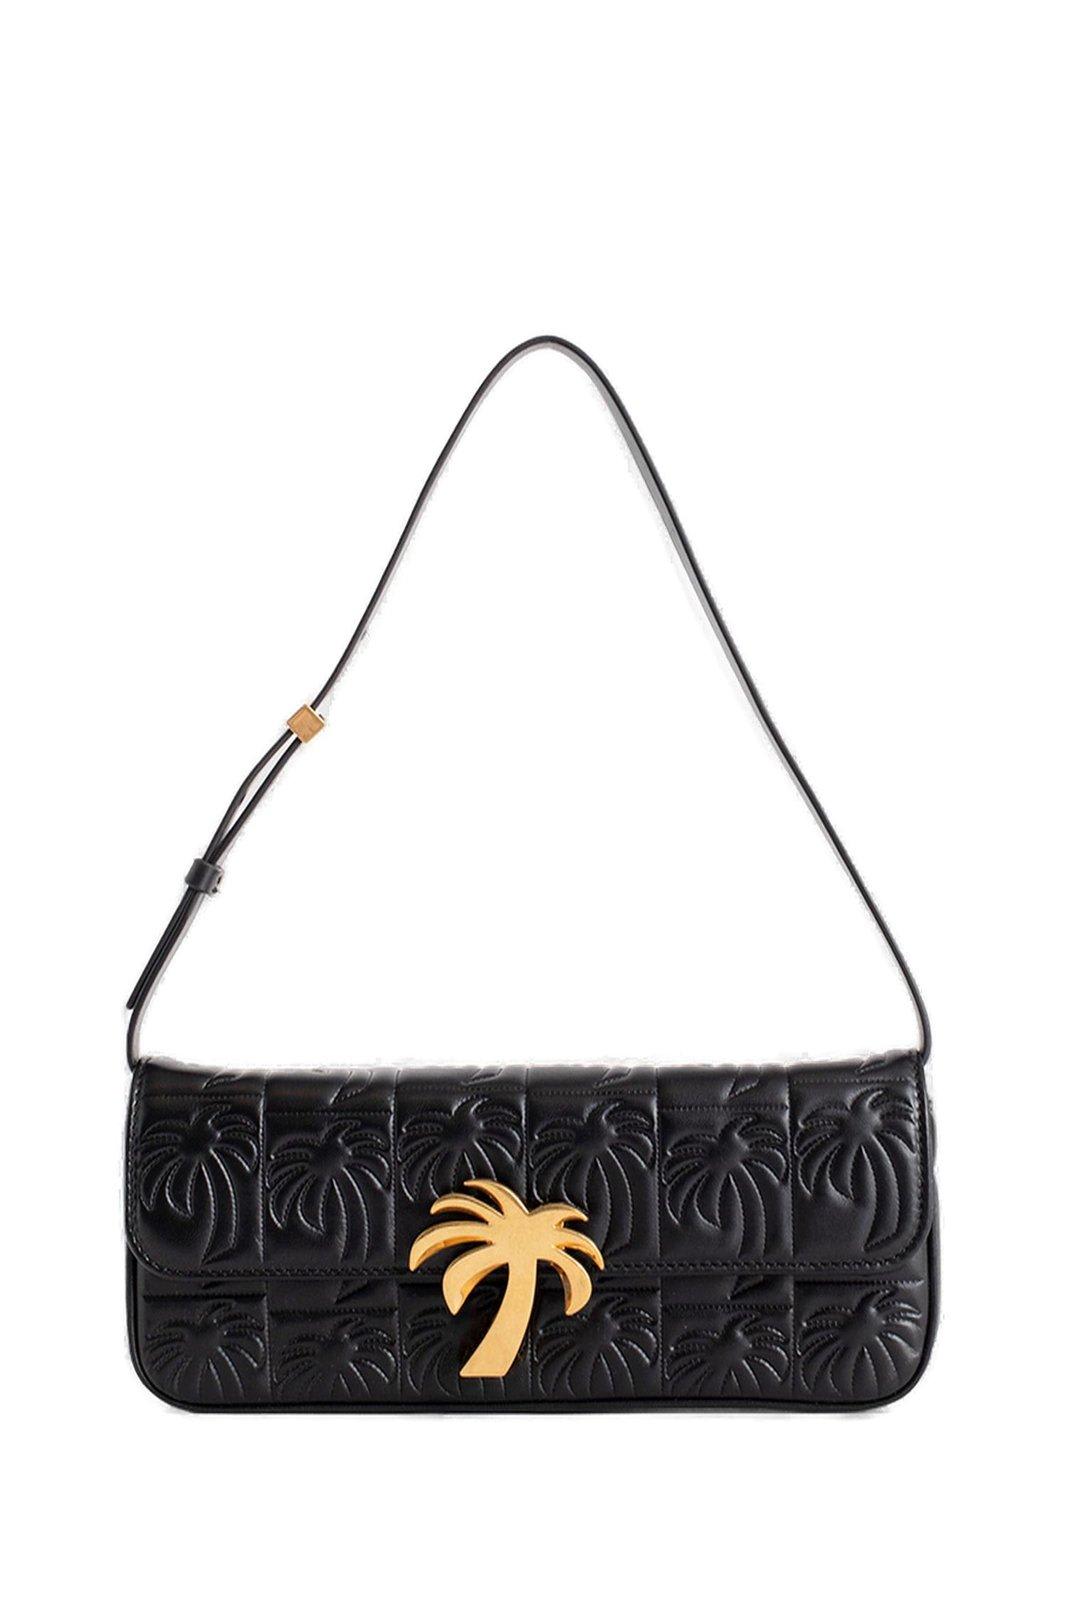 Palm Angels Palm Tree Plaque Foldover Top Shoulder Bag